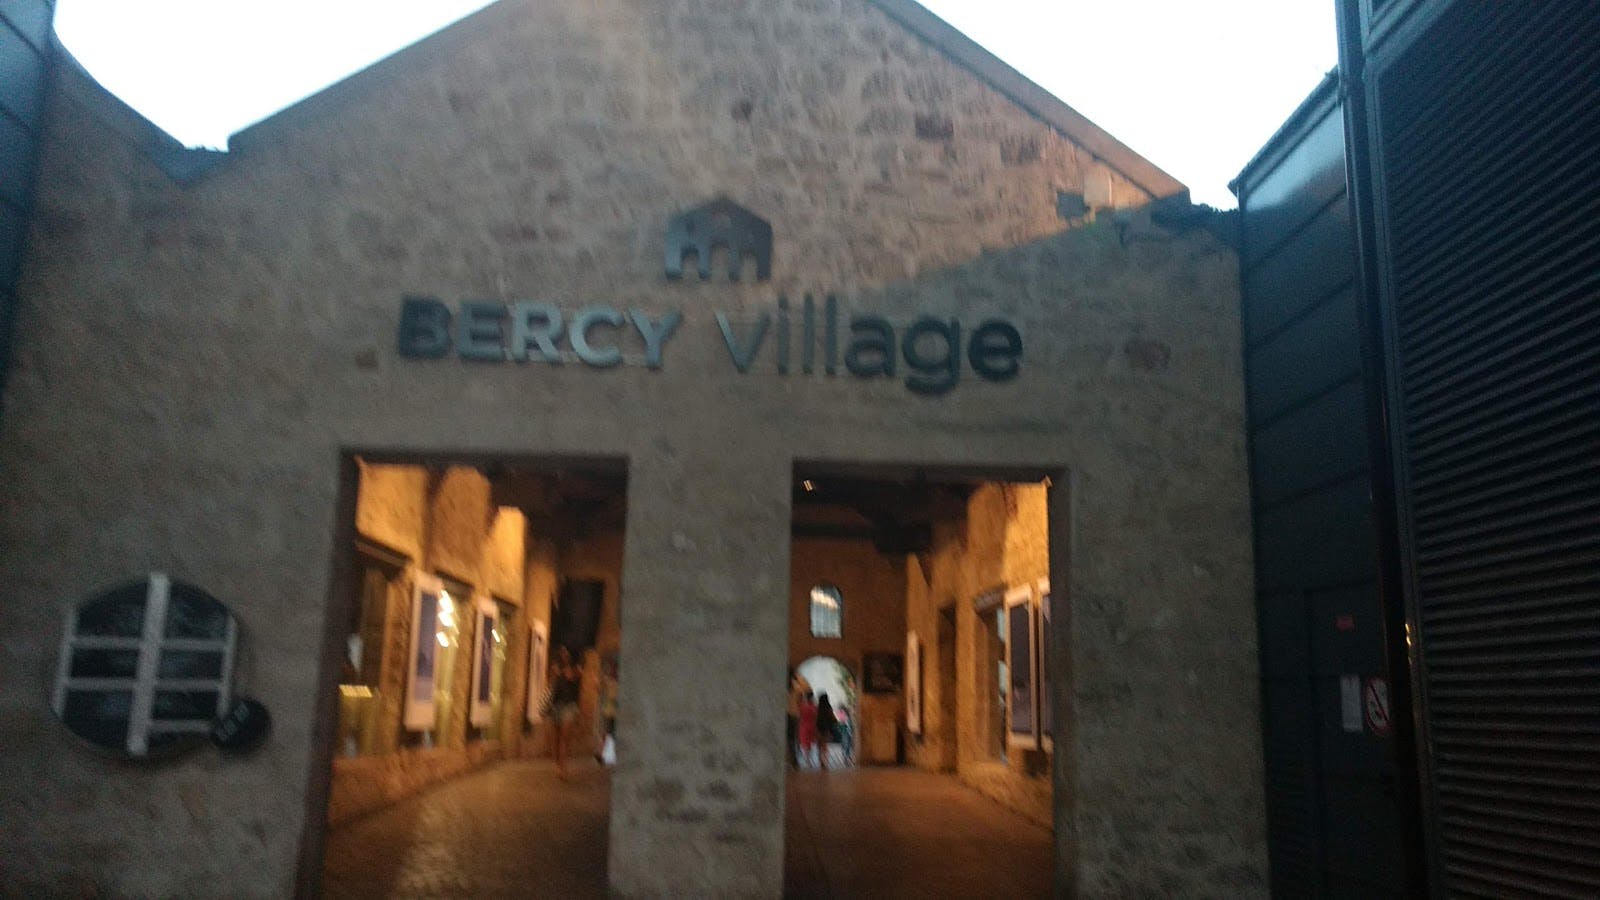 Image - Bercy Village